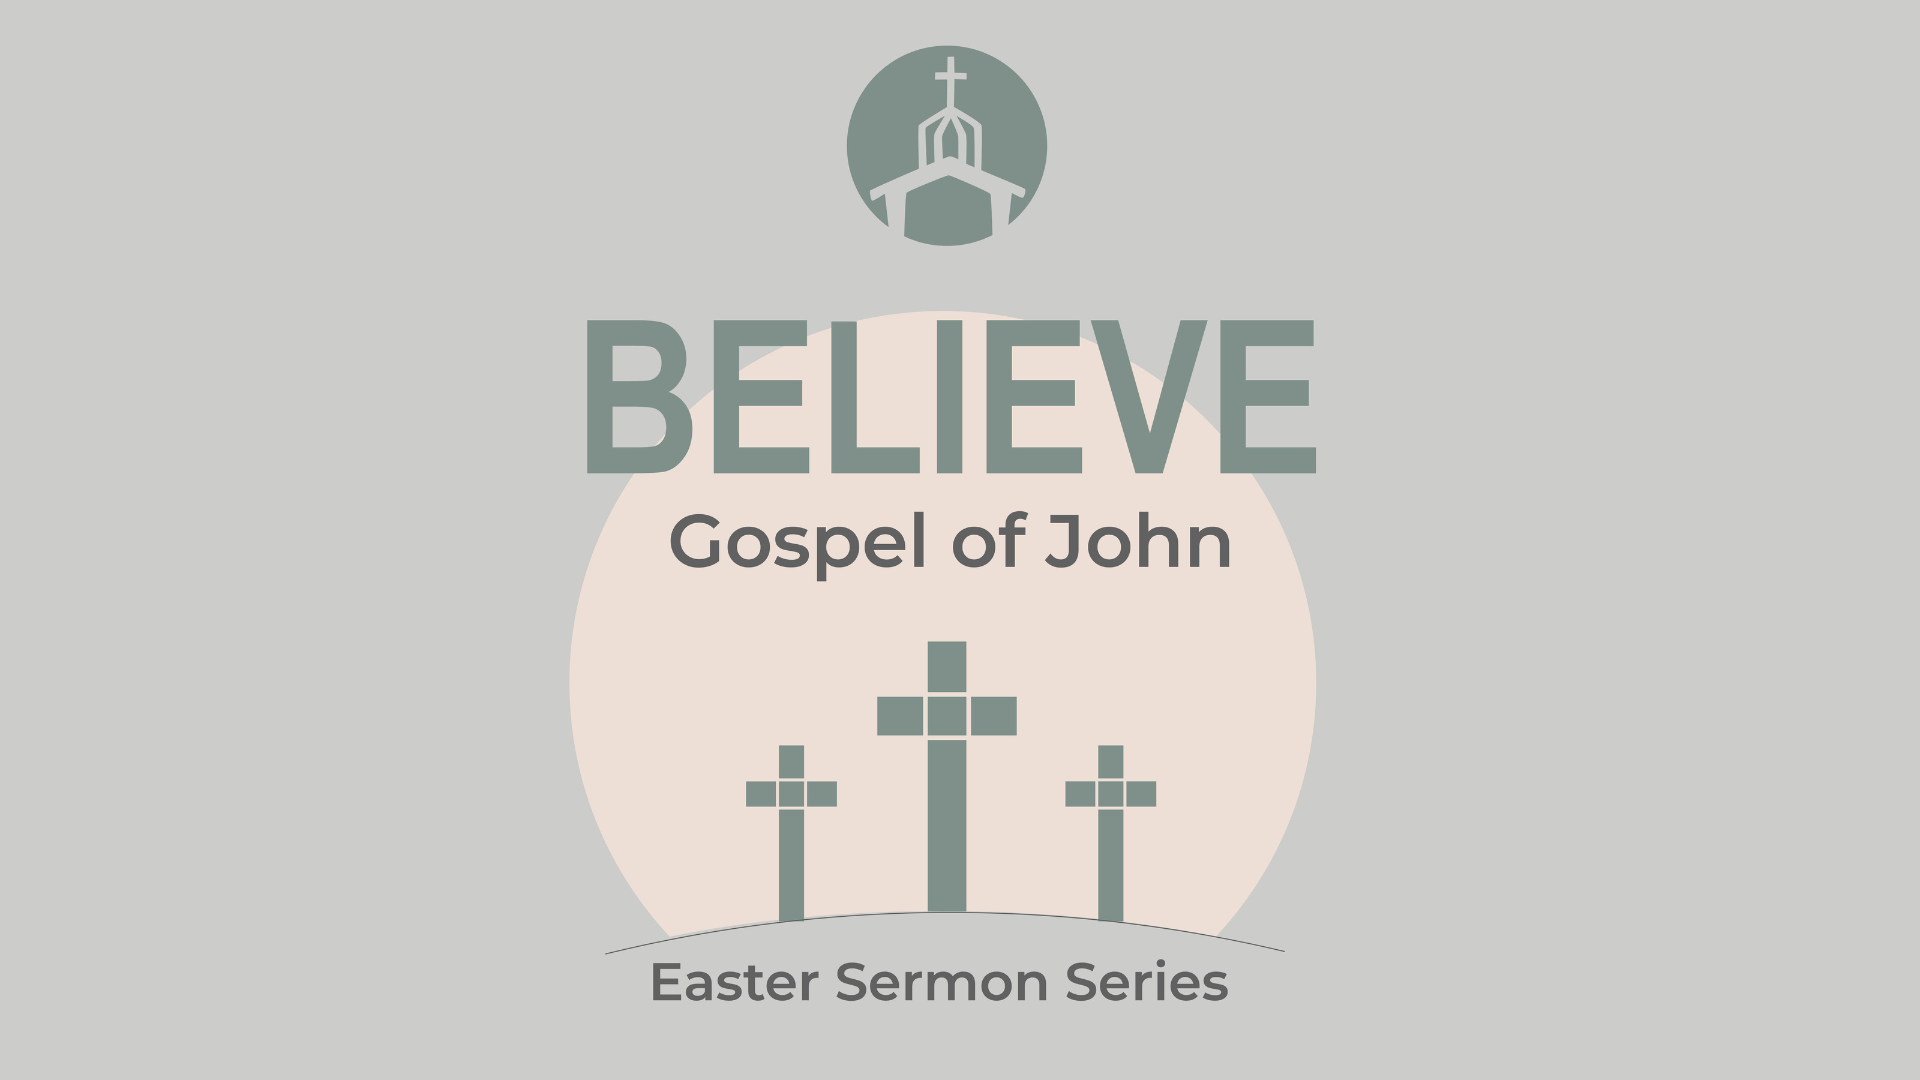 Sermon on the Mount series graphic